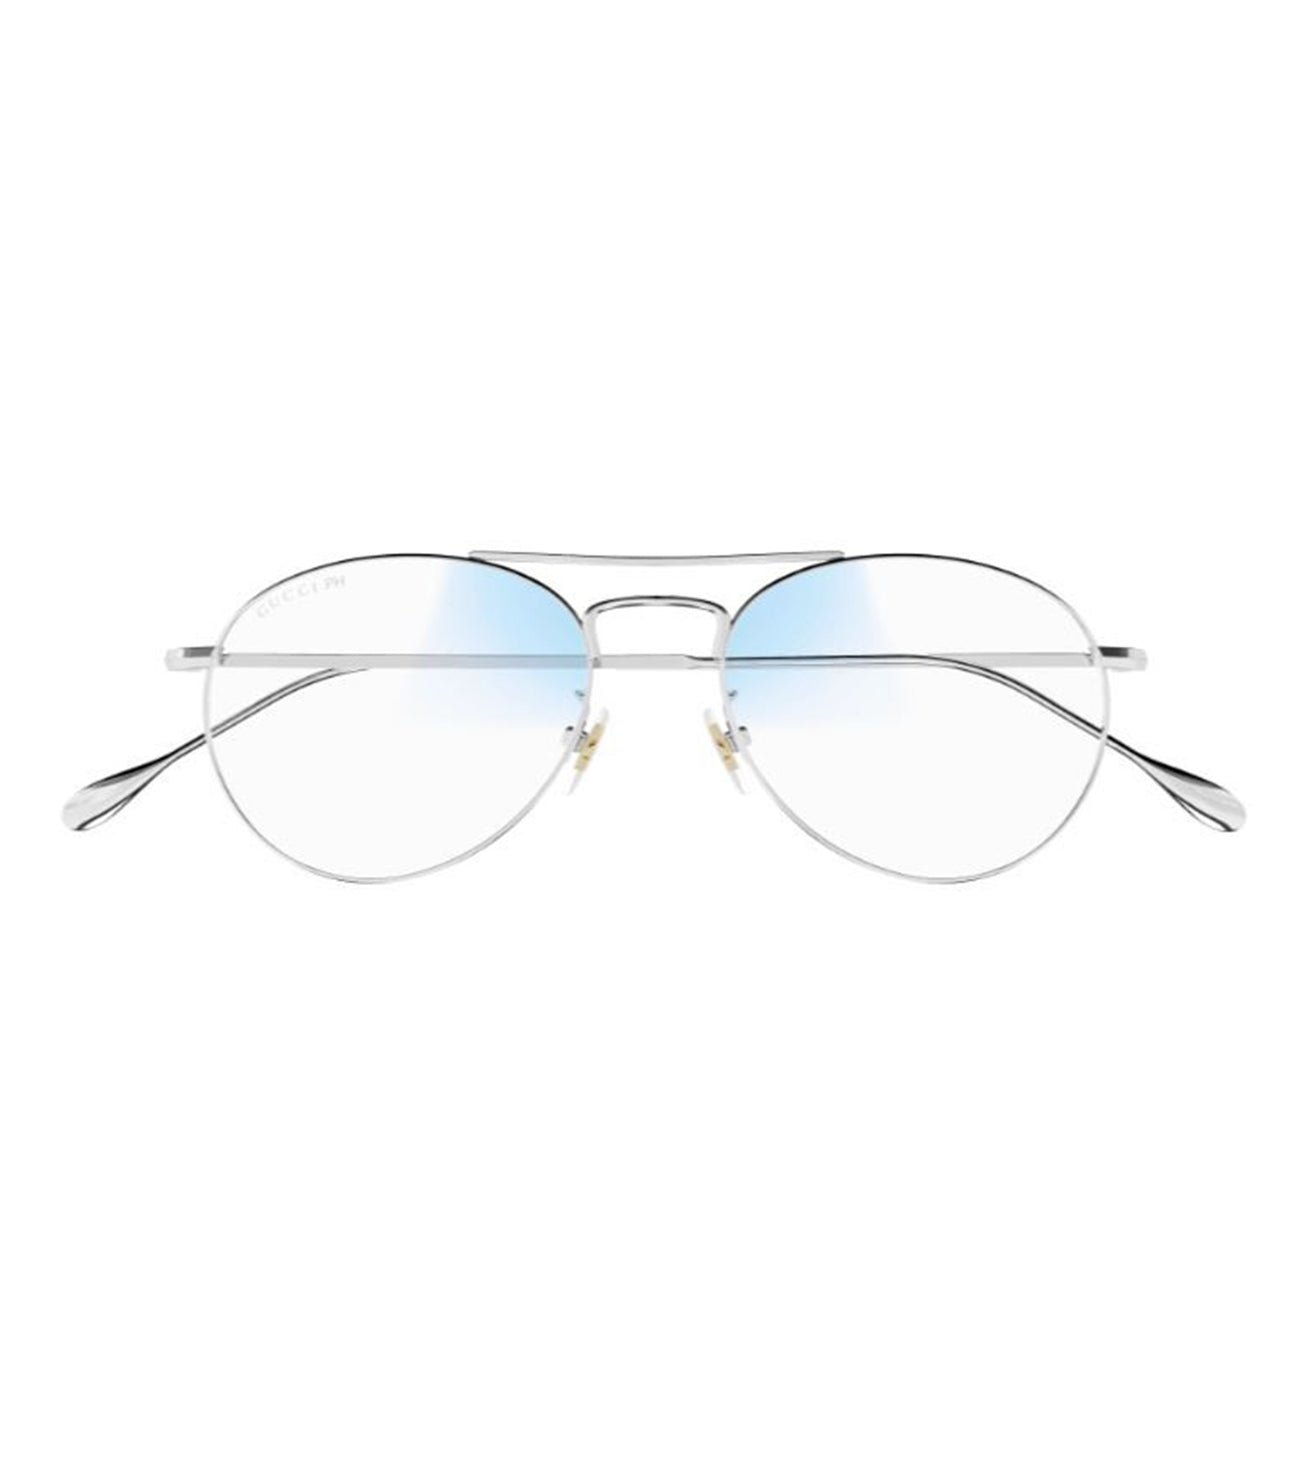 Gucci Men's Blue Aviator Sunglasses